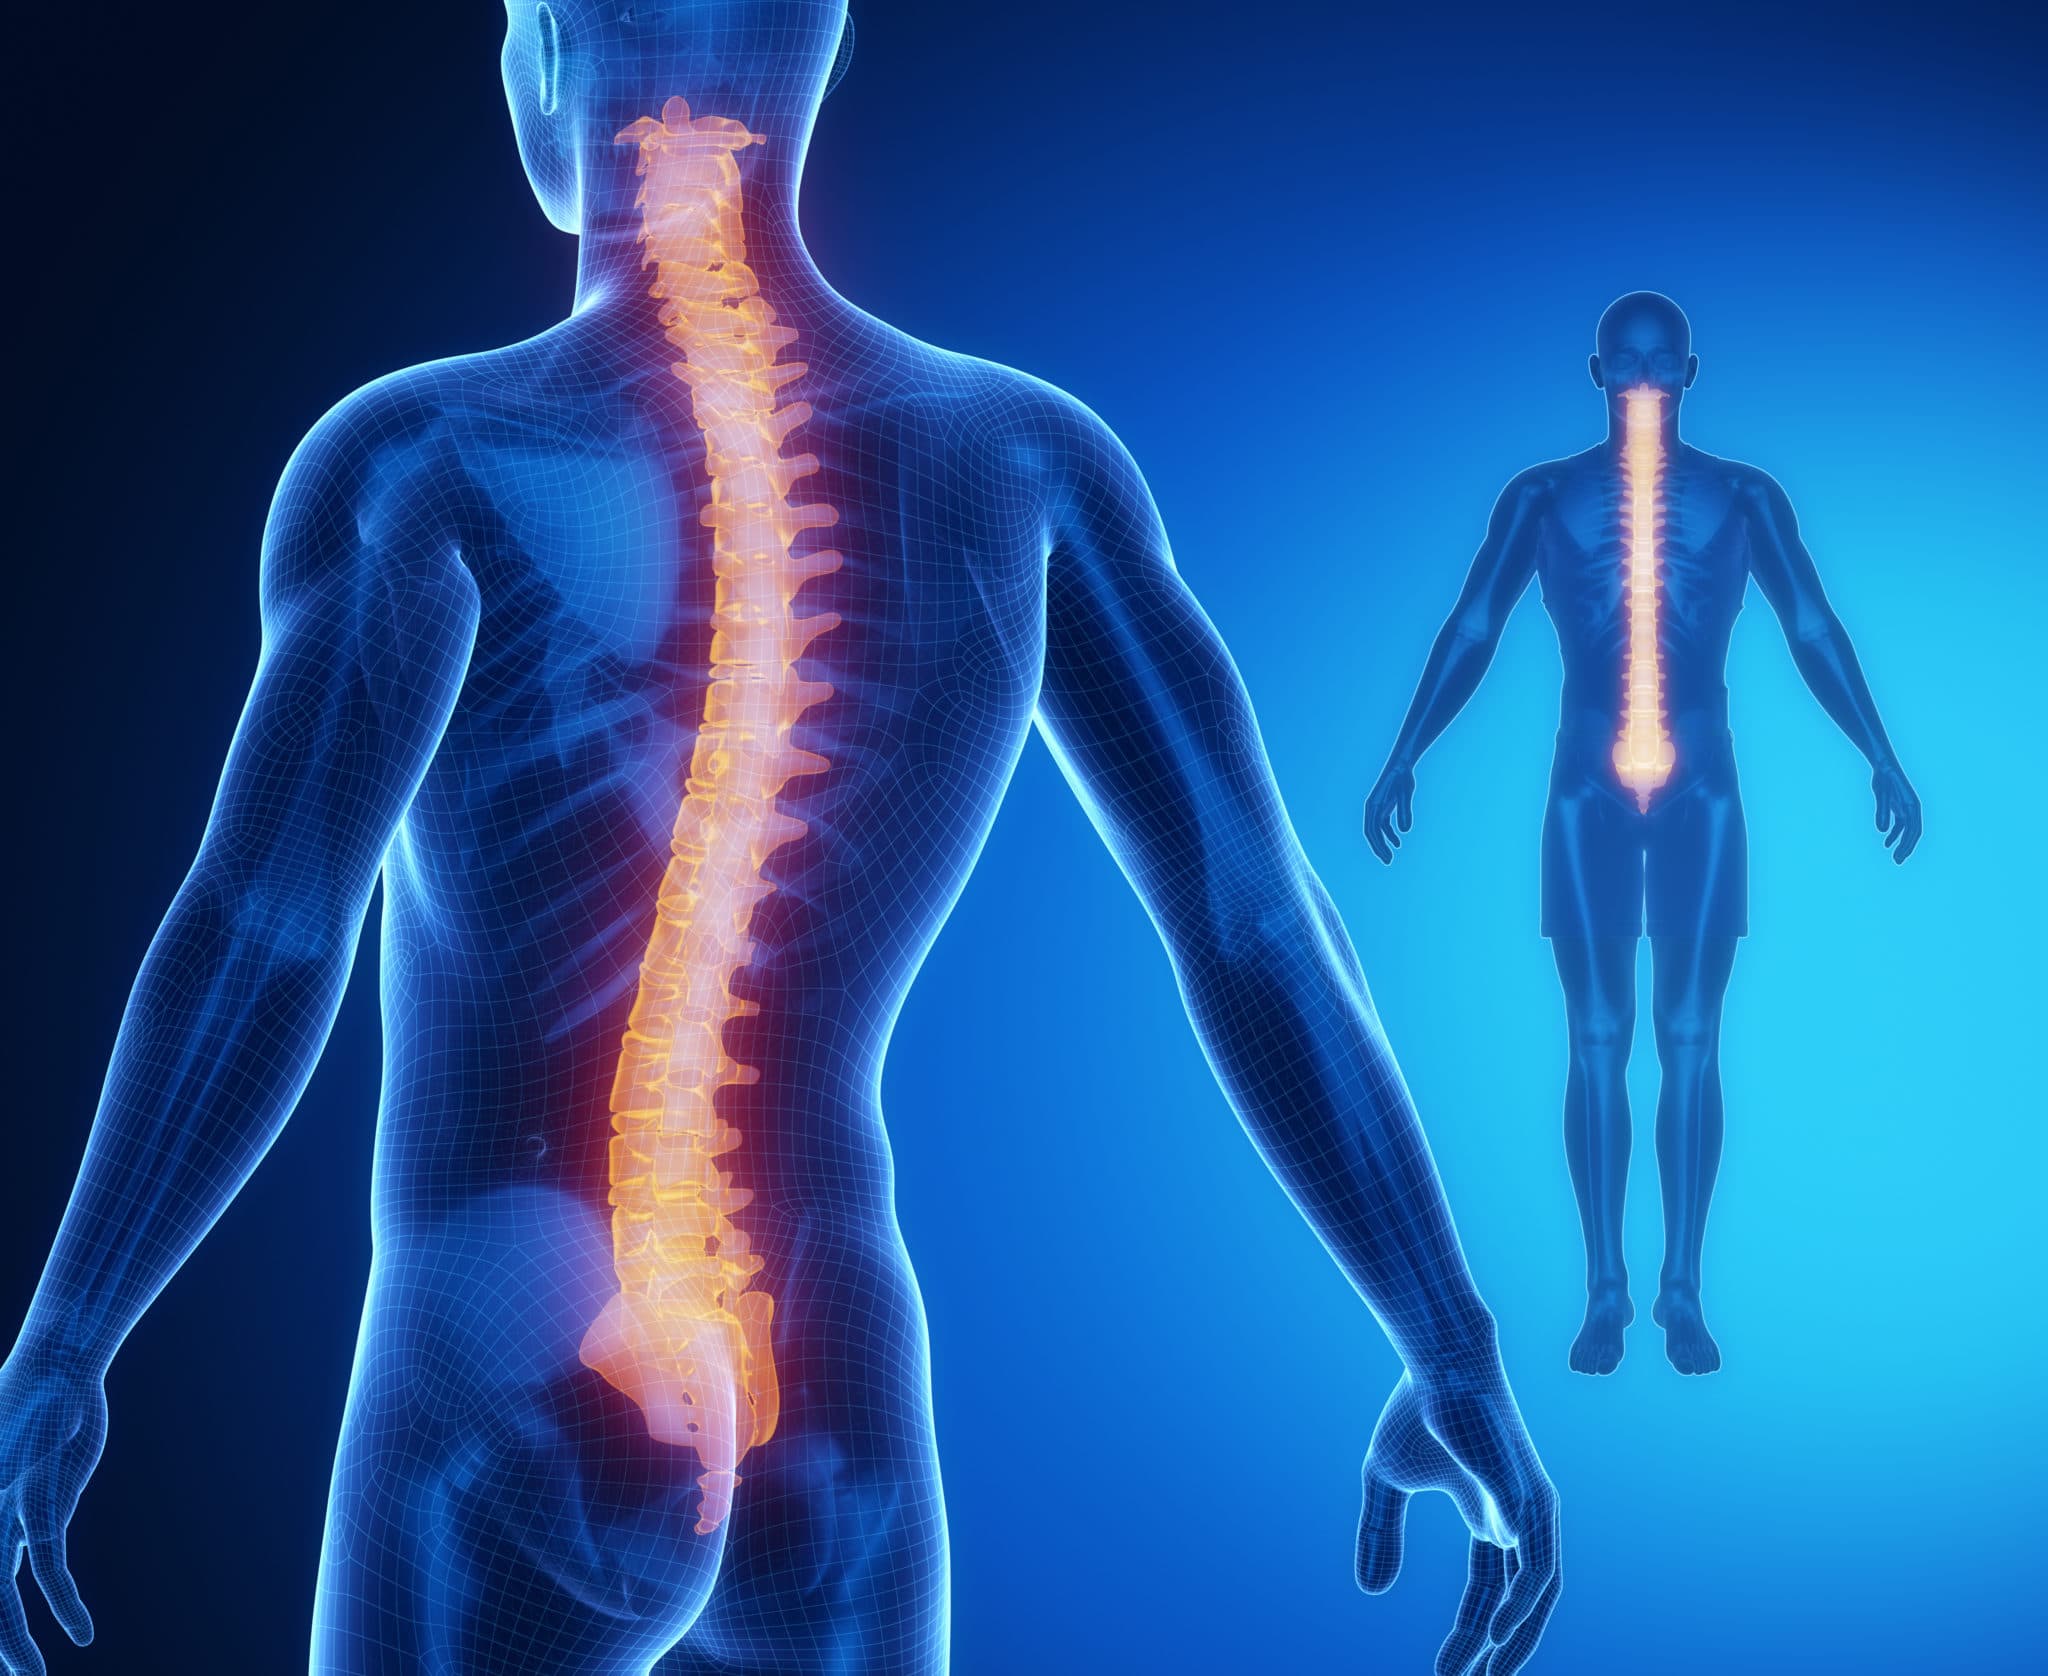 Spinal Cord injuries